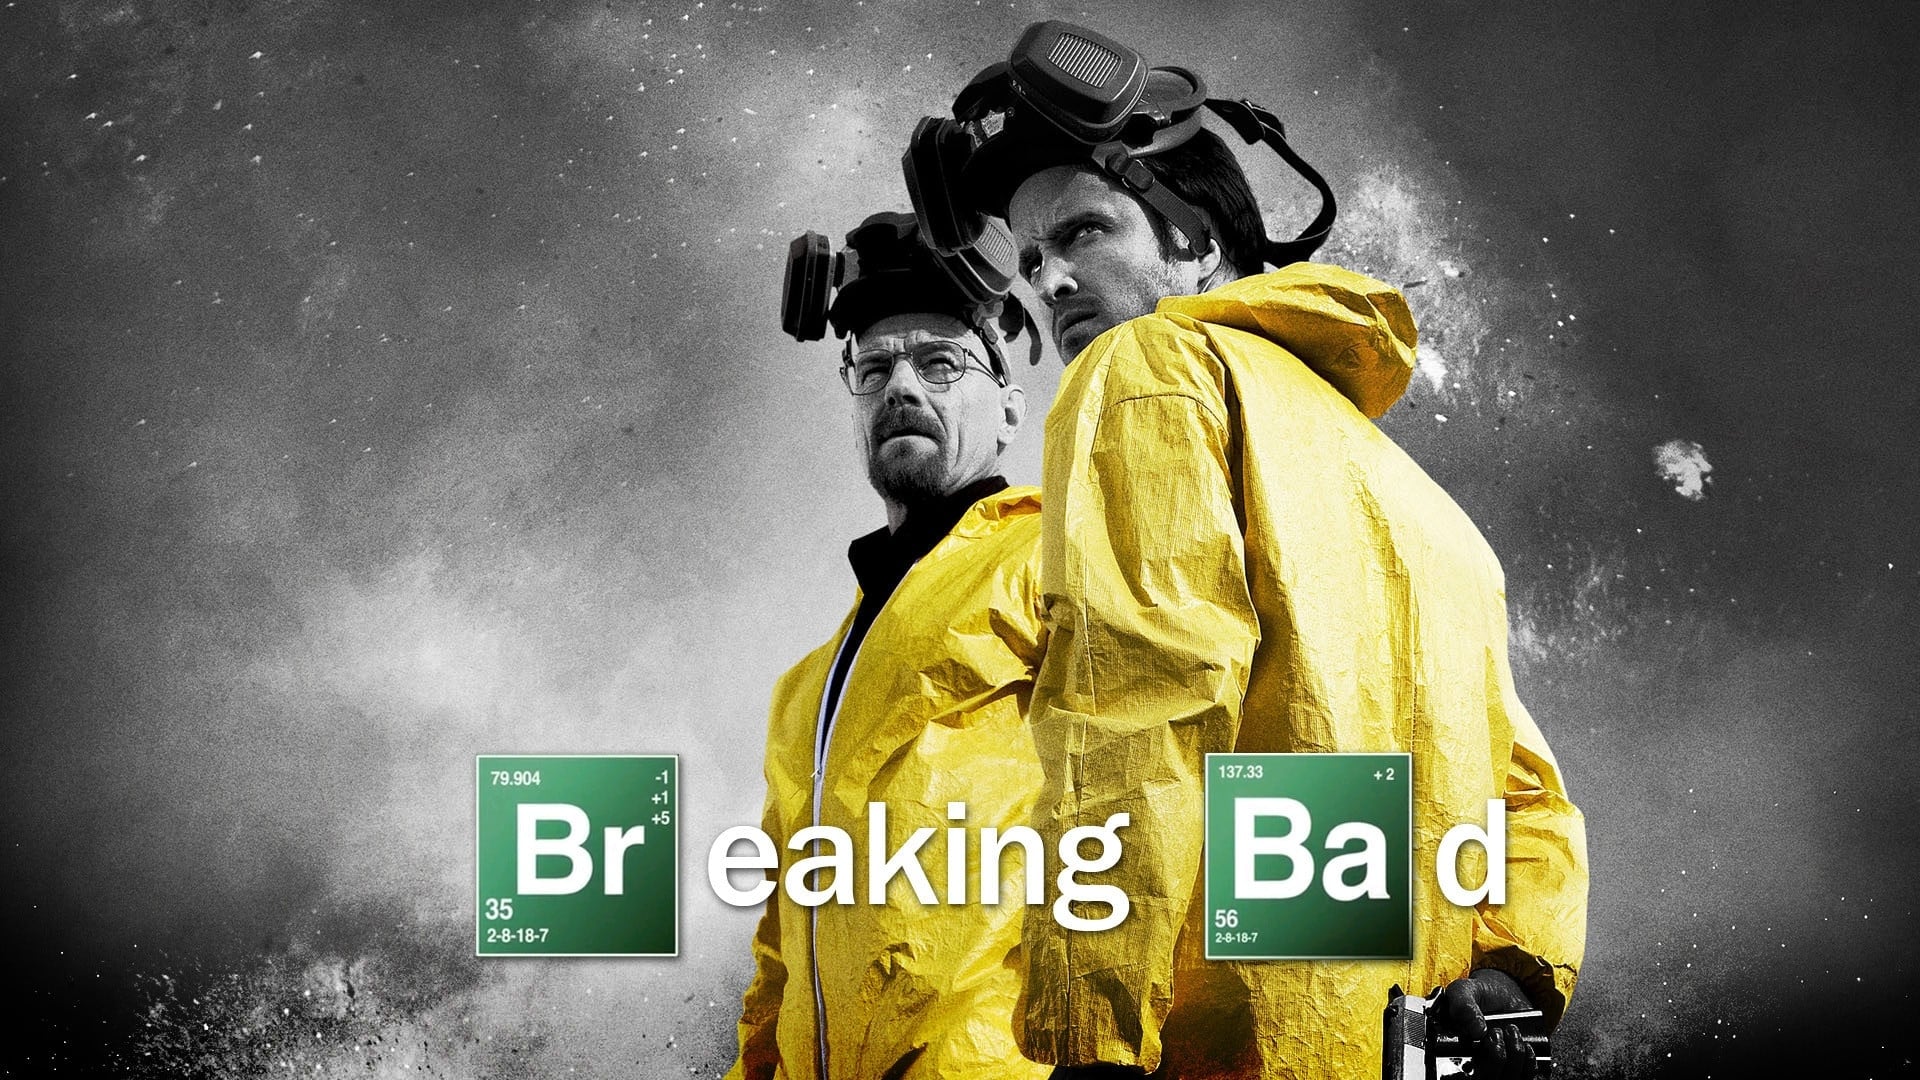 Breaking Bad - Série TV 2008 - AlloCiné